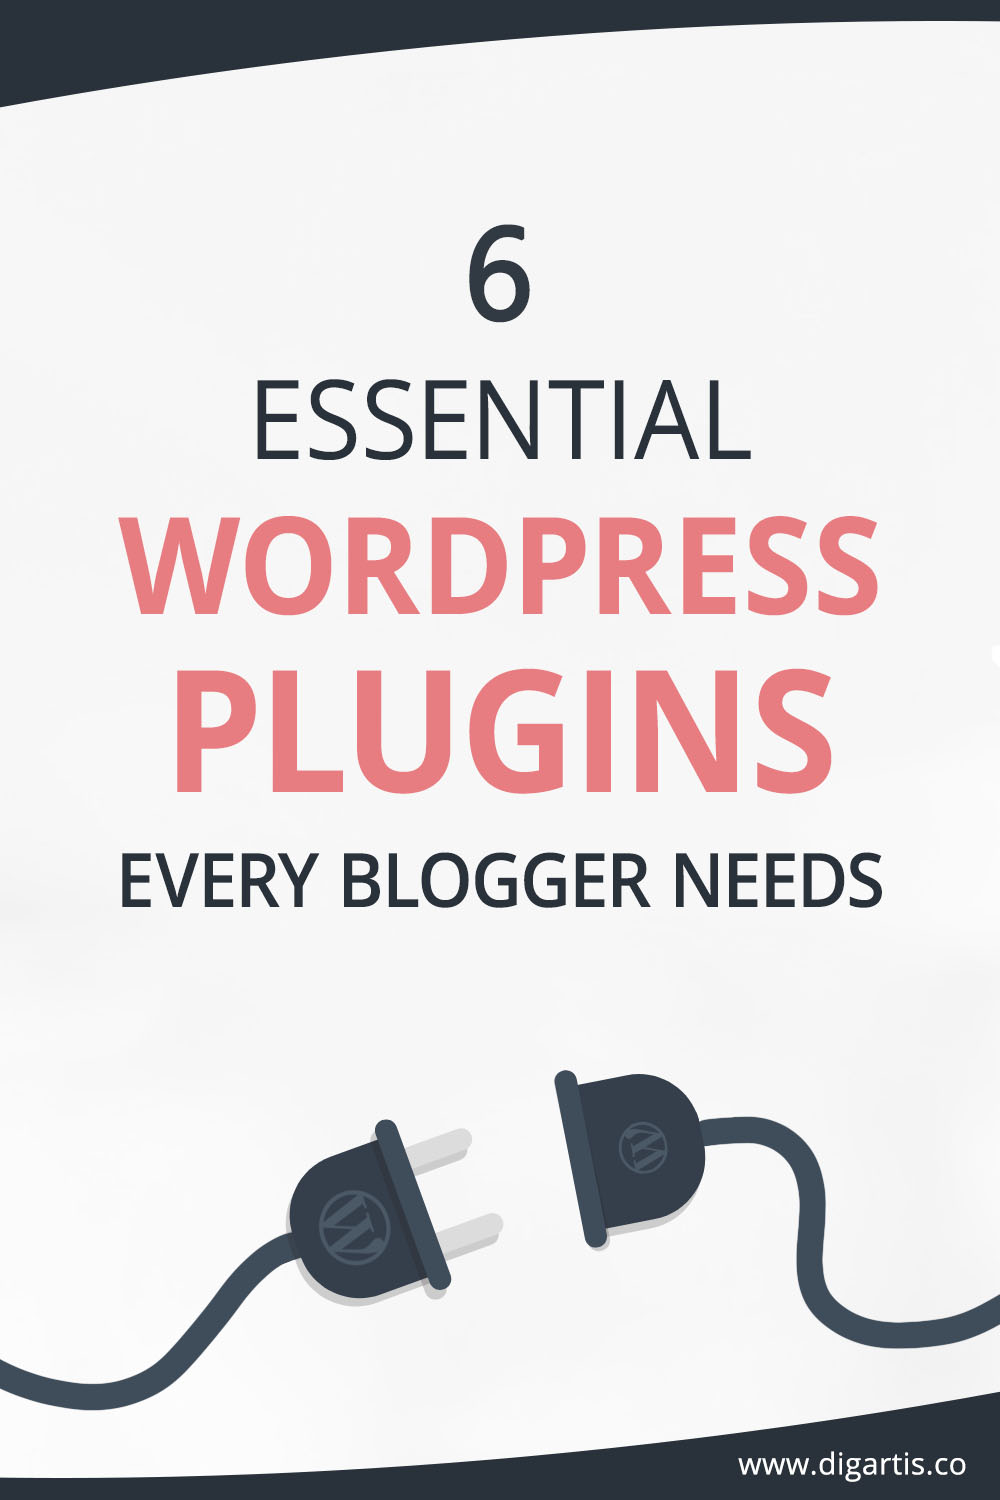 6 essential WordPress plugins every blogger needs